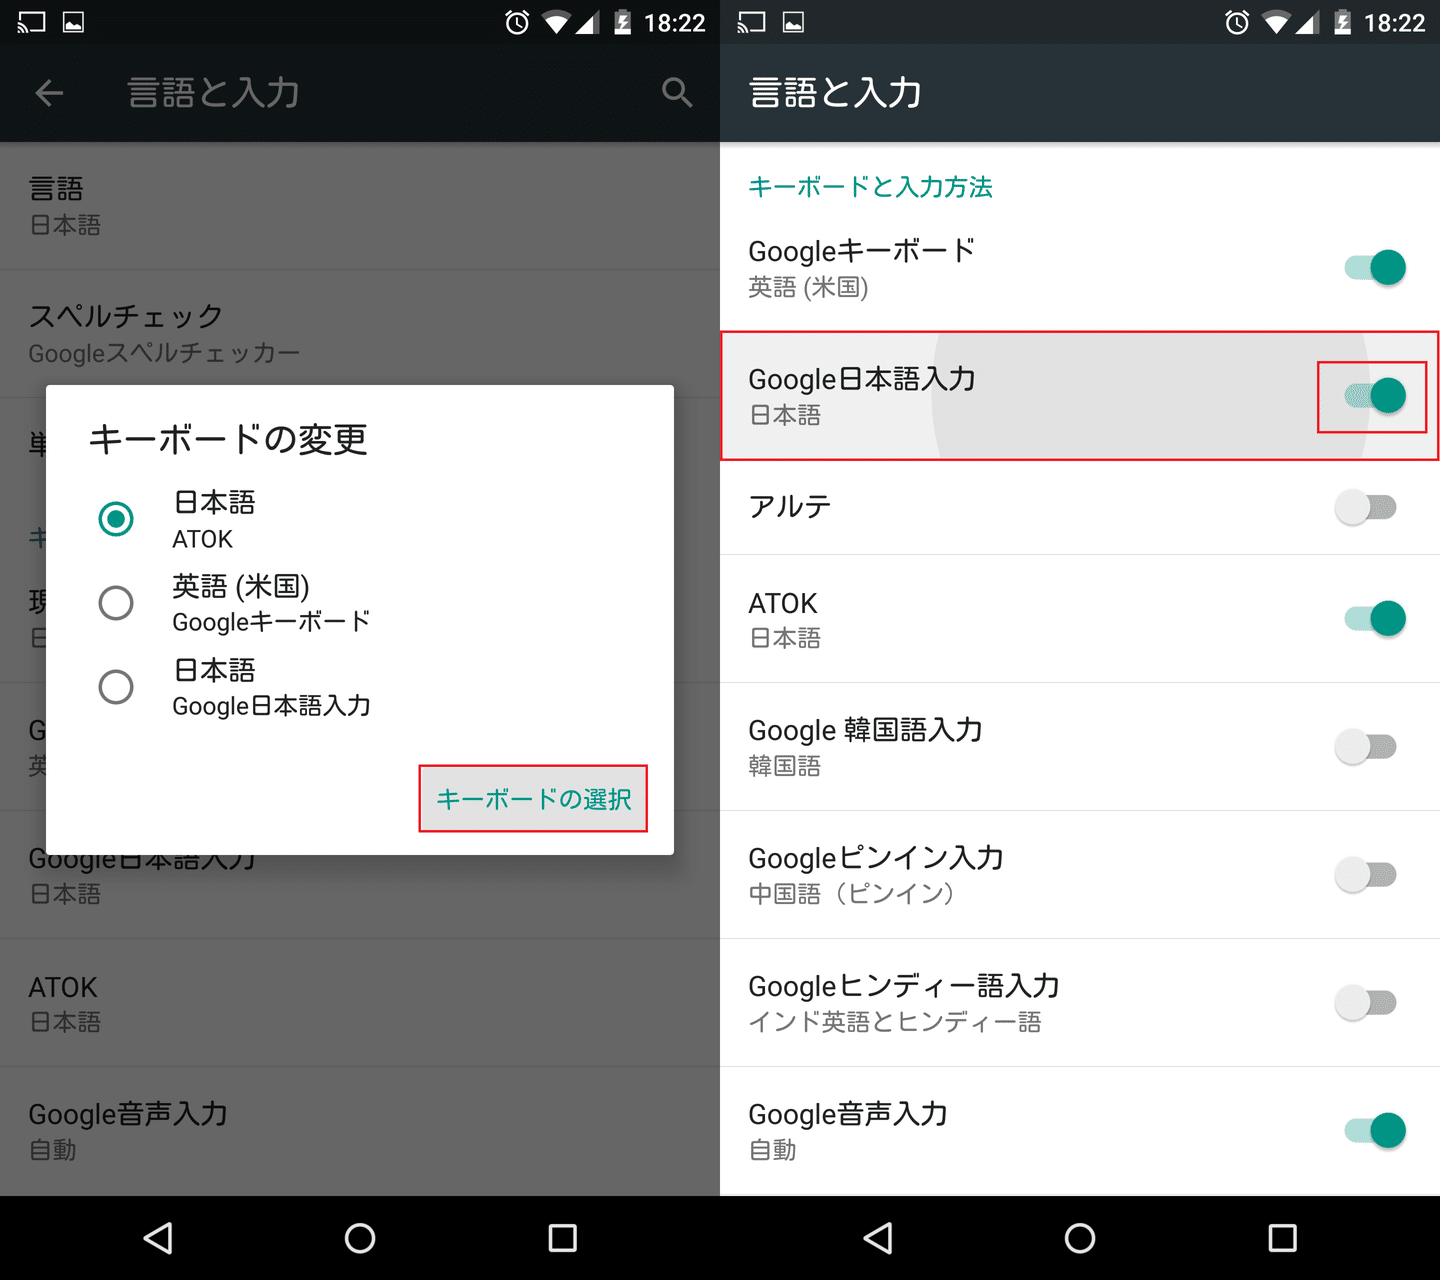 Google日本語入力android版の設定と便利な使い方まとめ